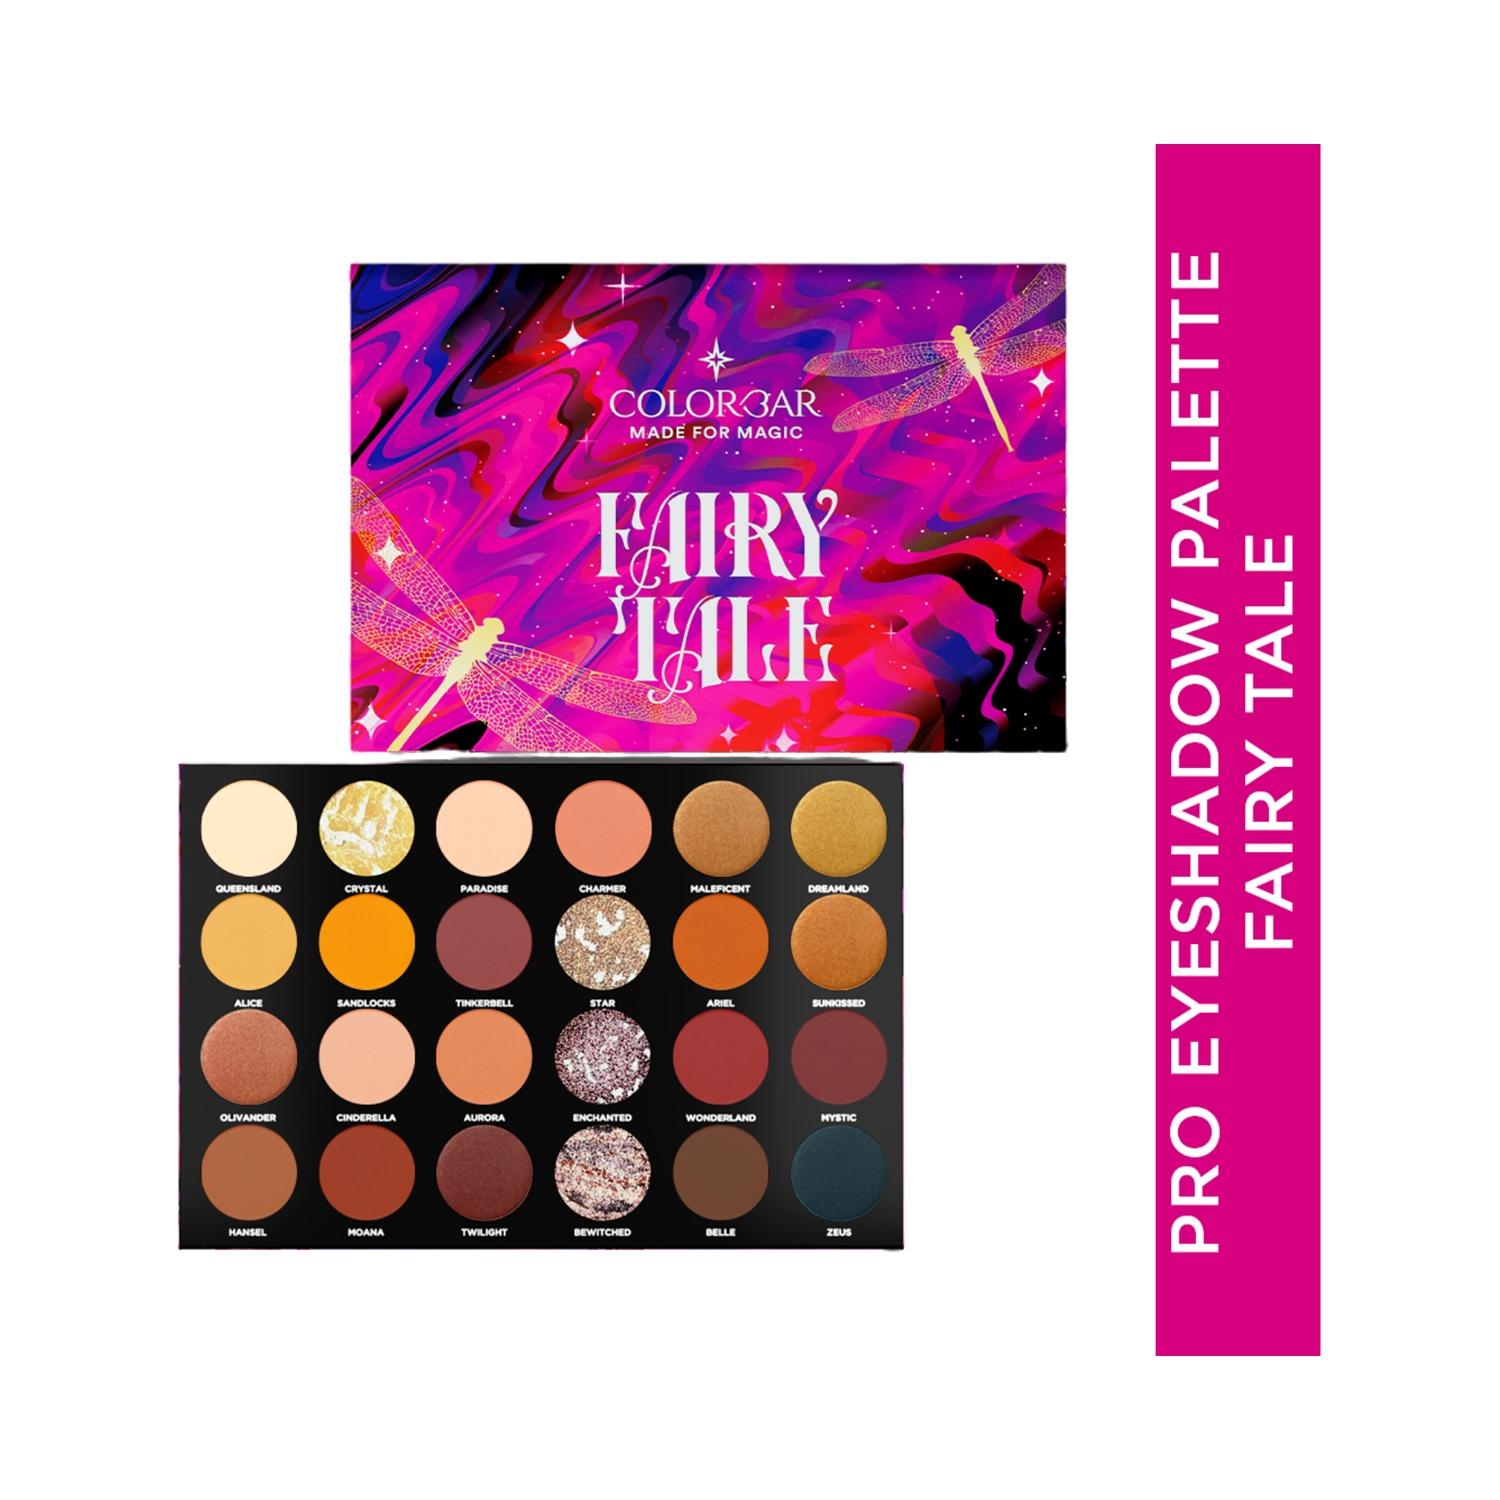 colorbar fairy-tale eyeshadow palette - multi-color (30g)